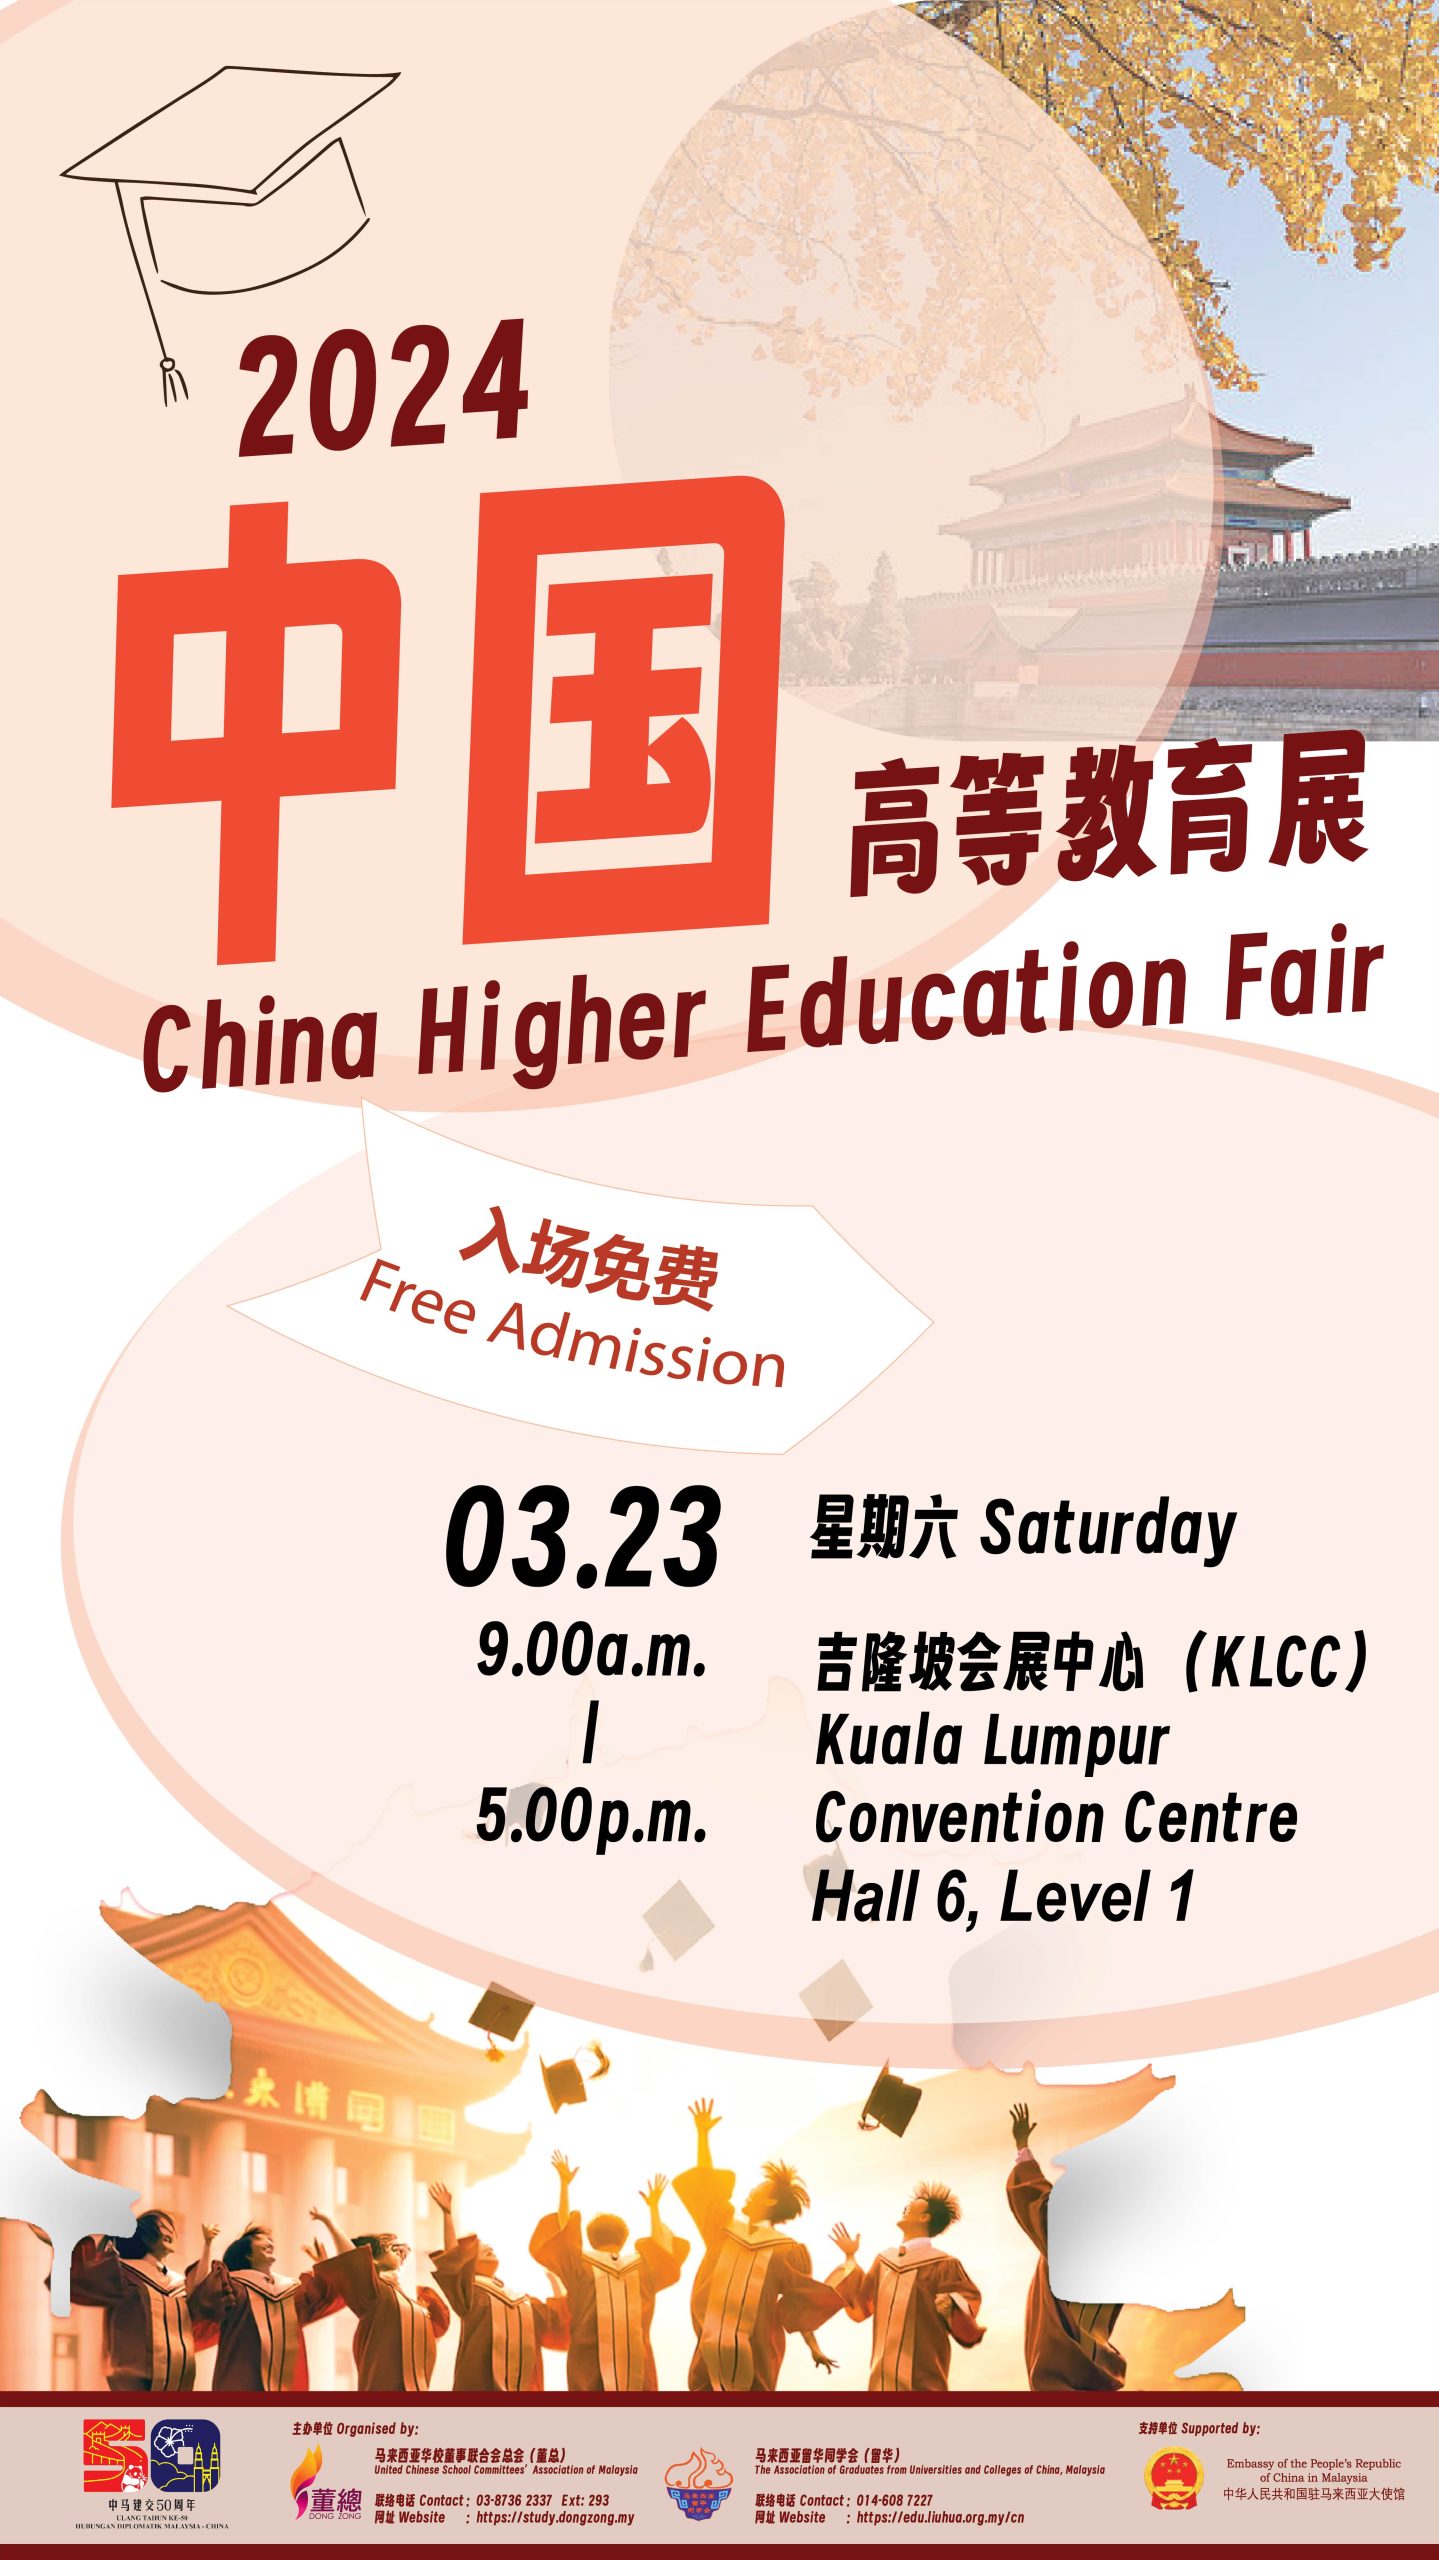 China Higher Education Fair at Kuala Lumpur Convention Centre